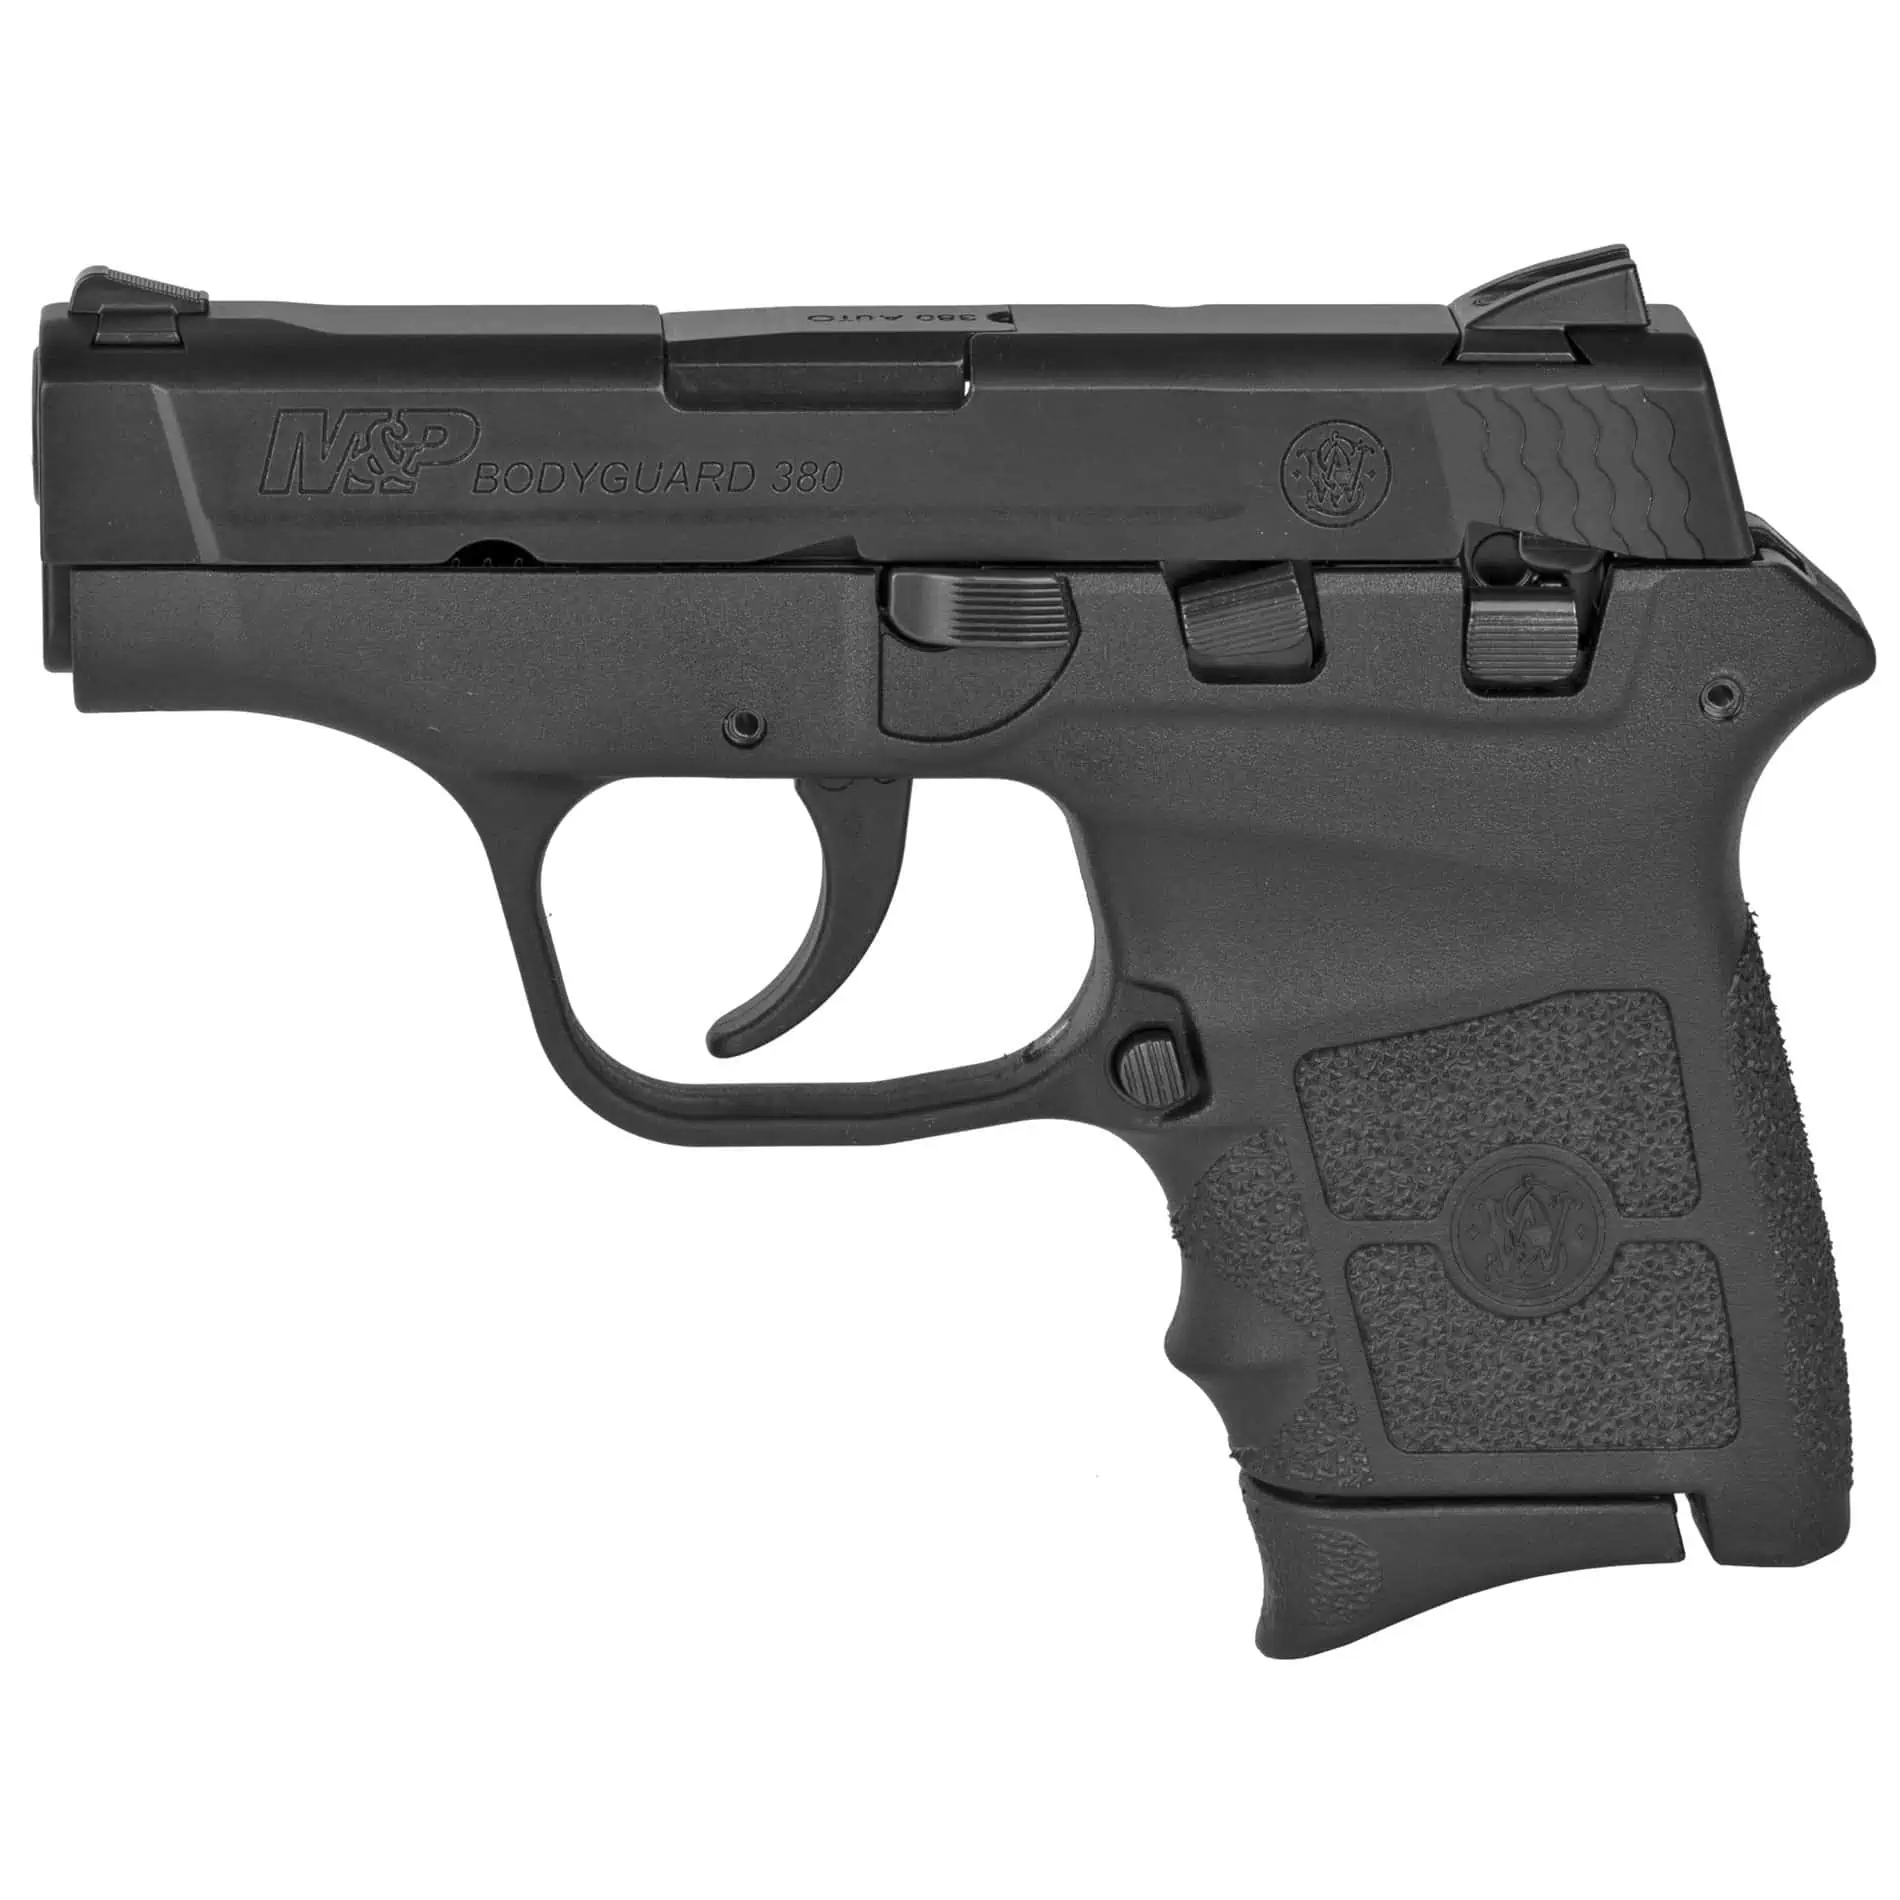 S&W Bodyguard 380 ACP 2.75" Pistol - 6 Round - Black - Manual Safety